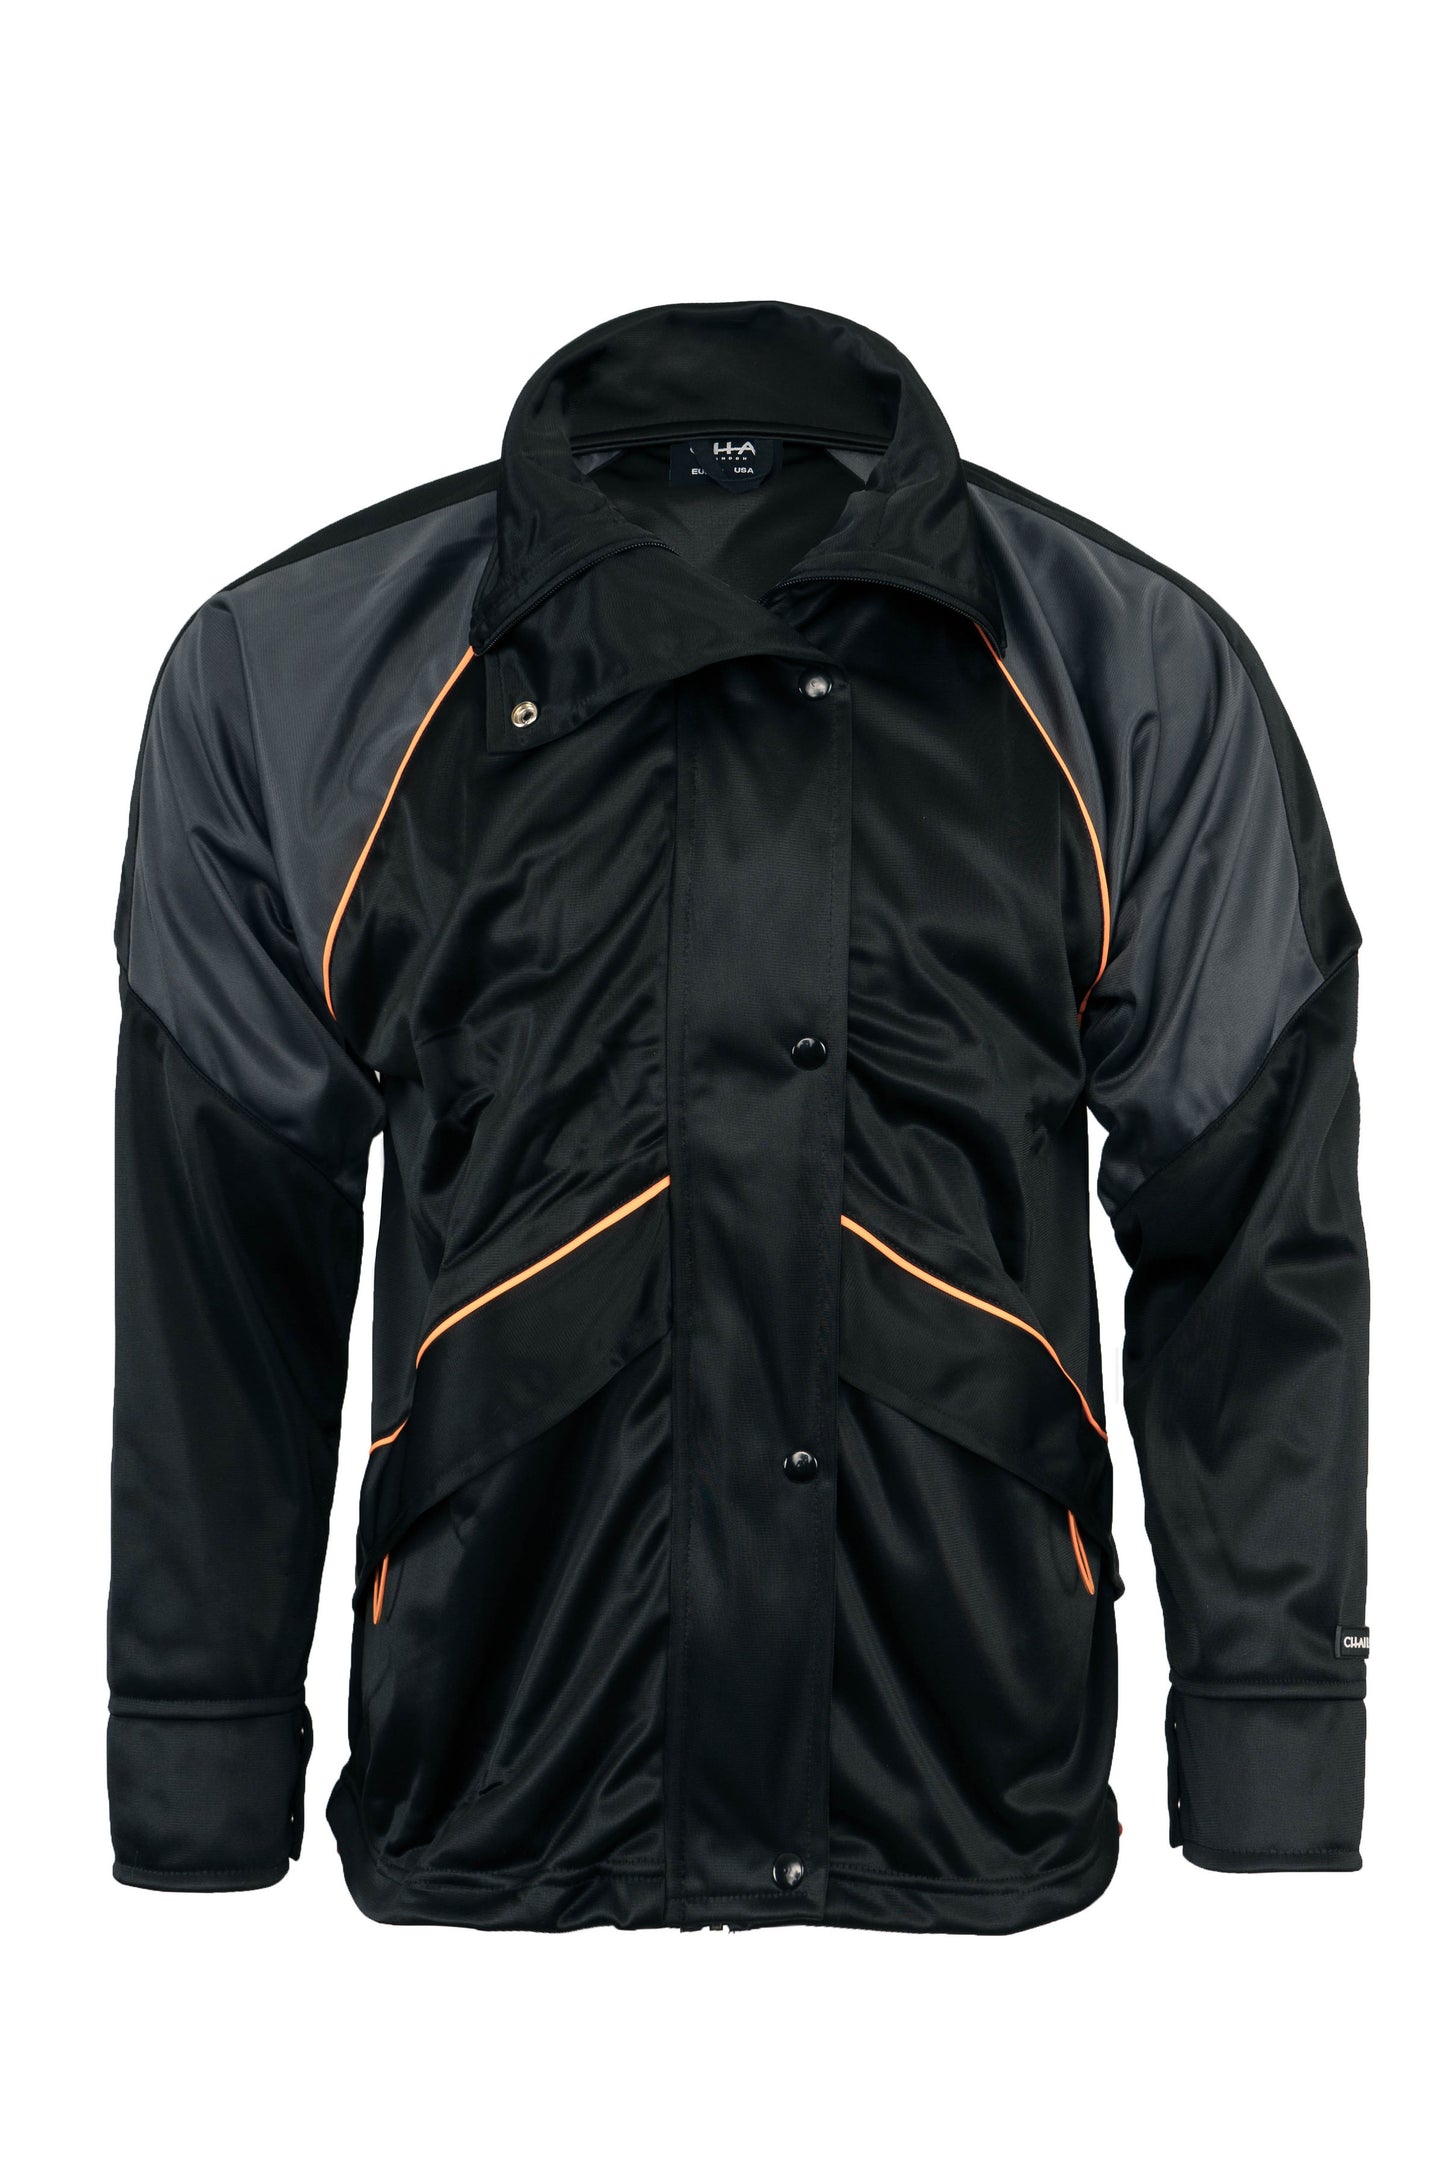 Windbreaker Jacket - Black / Orange